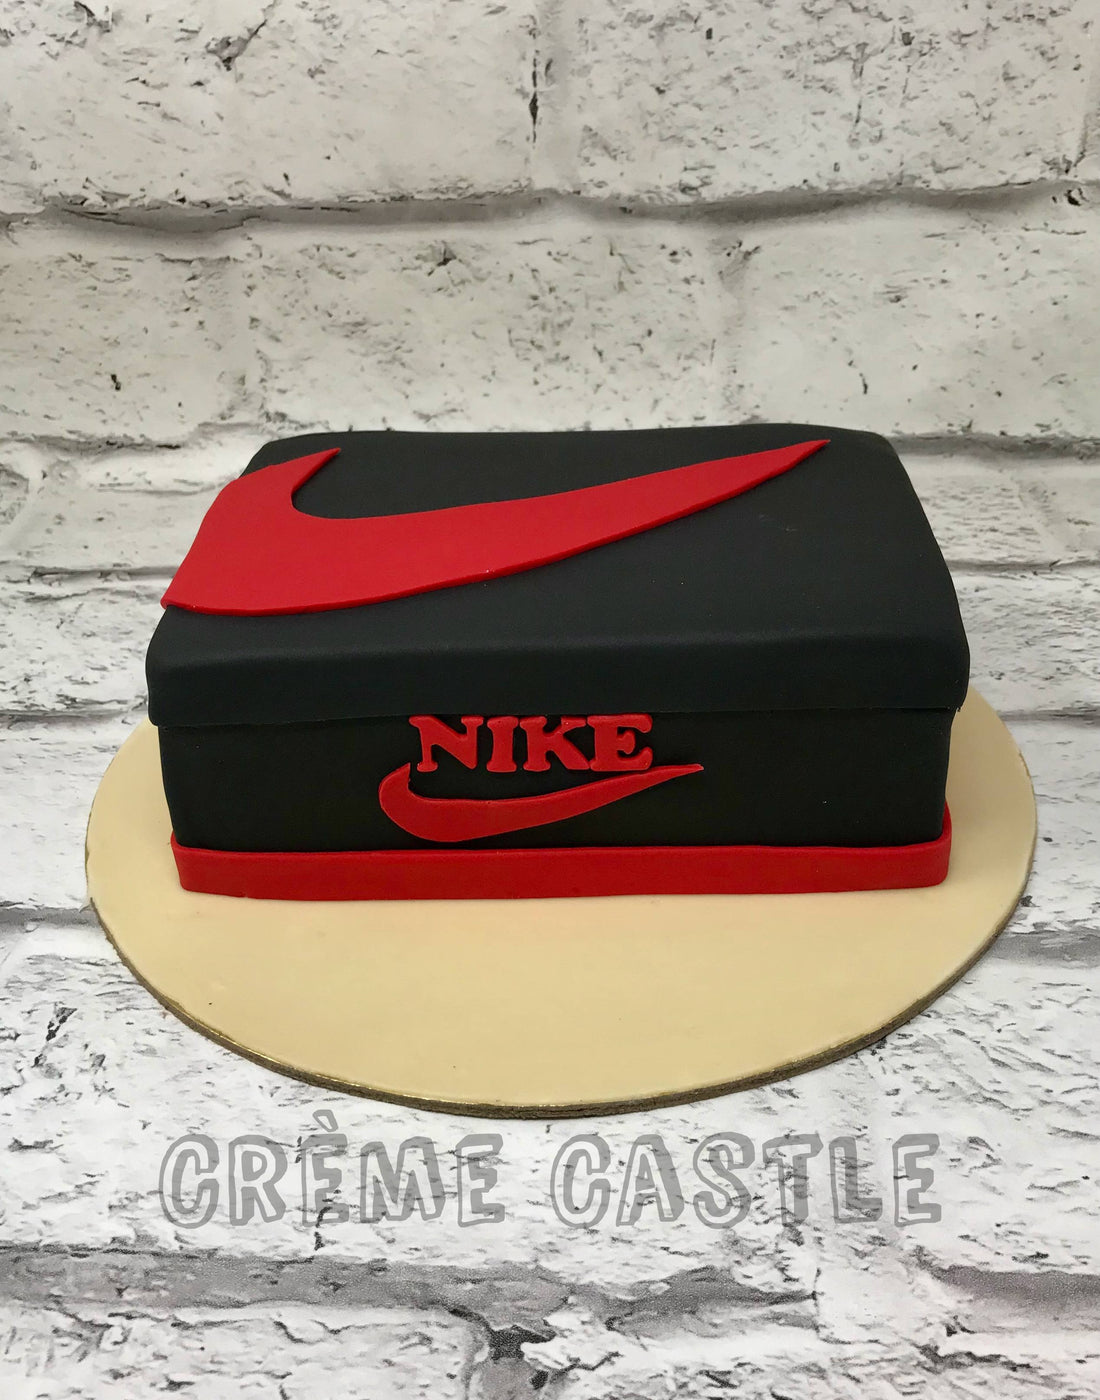 Nike Box Cake